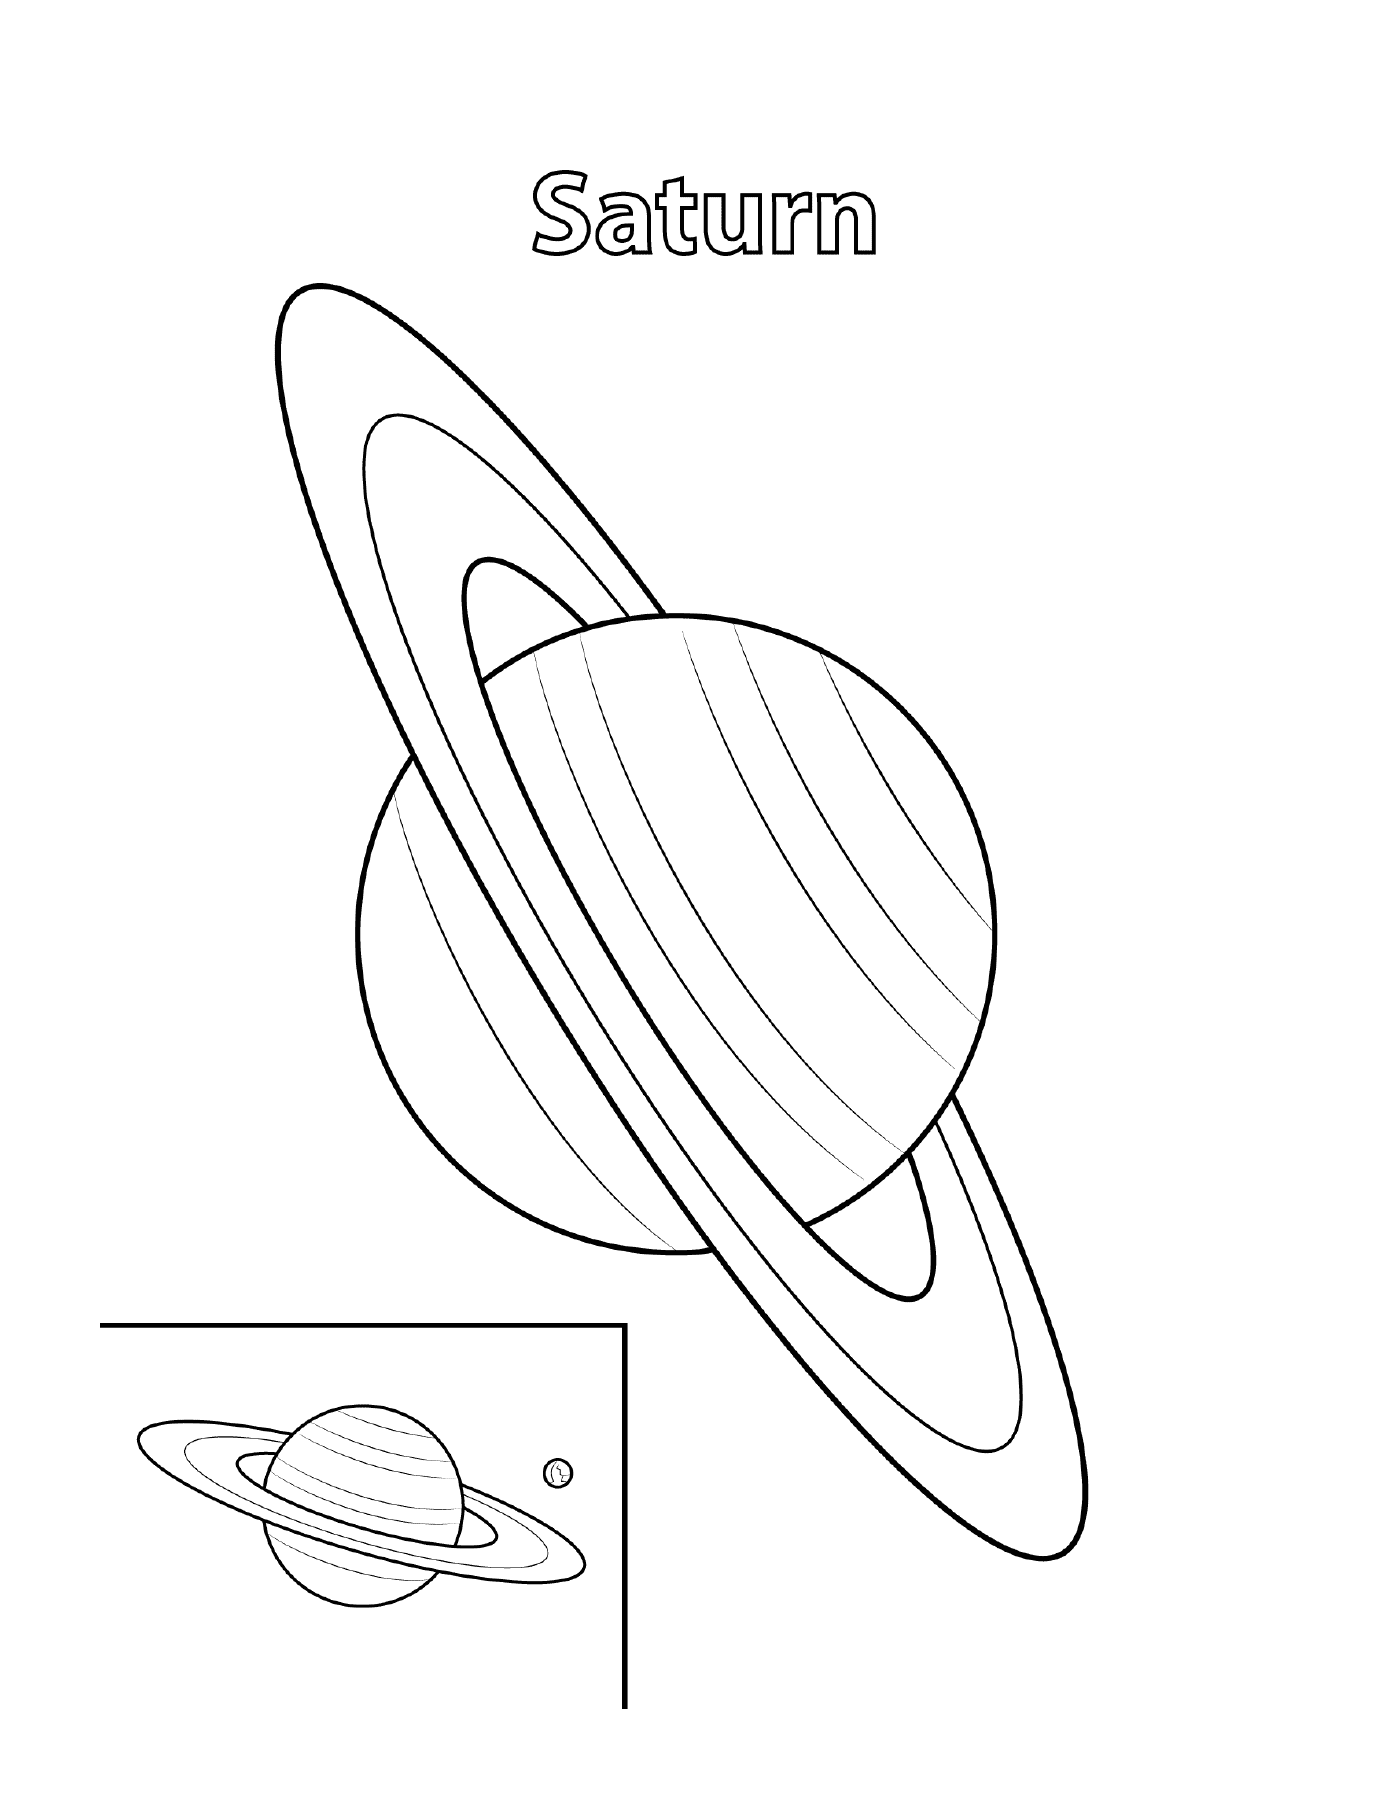  Contour of Saturn with inscription 